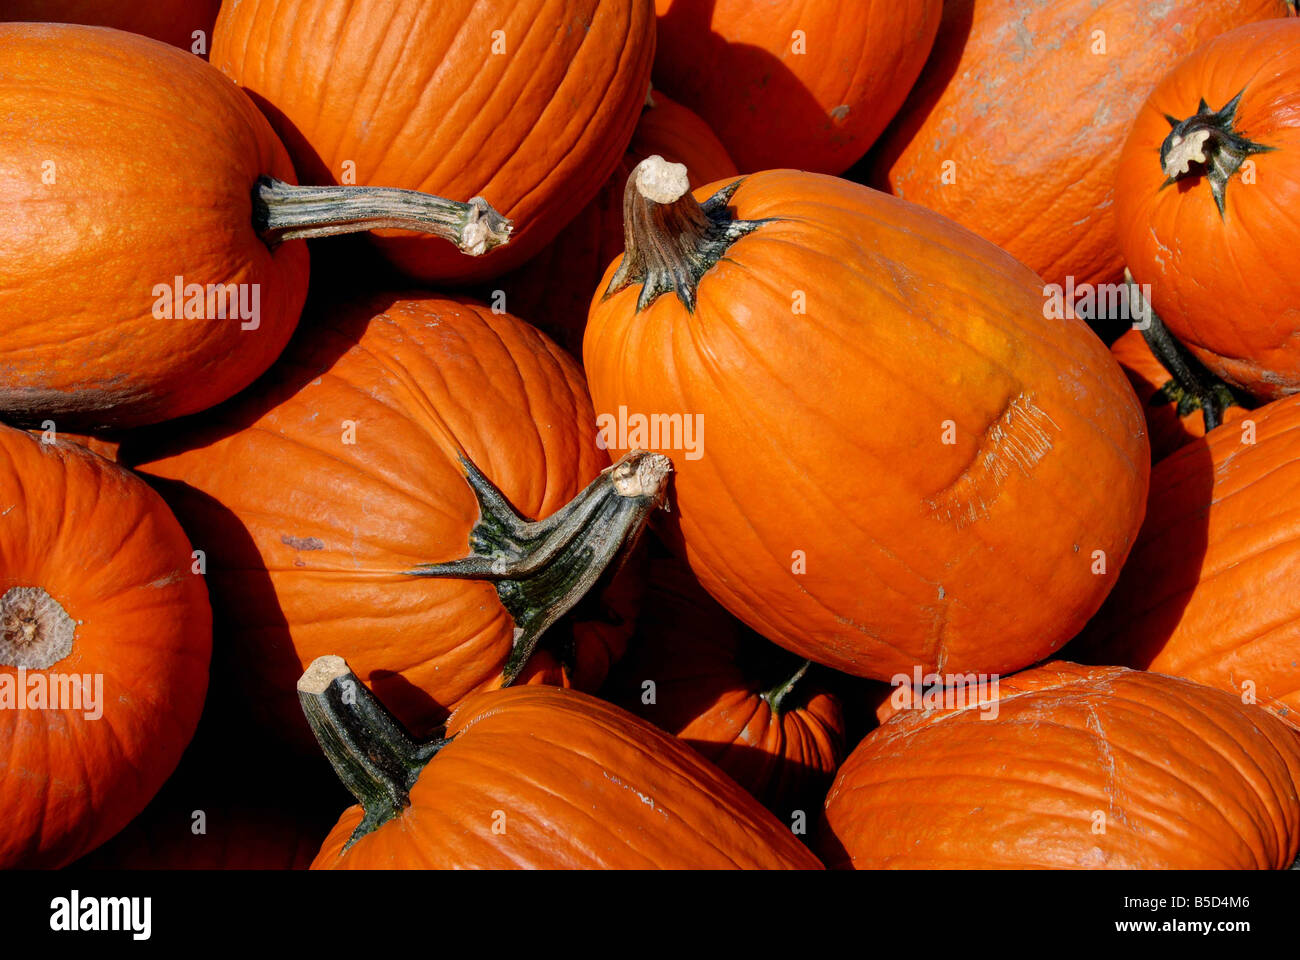 Pumpkins on Hay Bales (Cucurbita pepo) Stock Photo